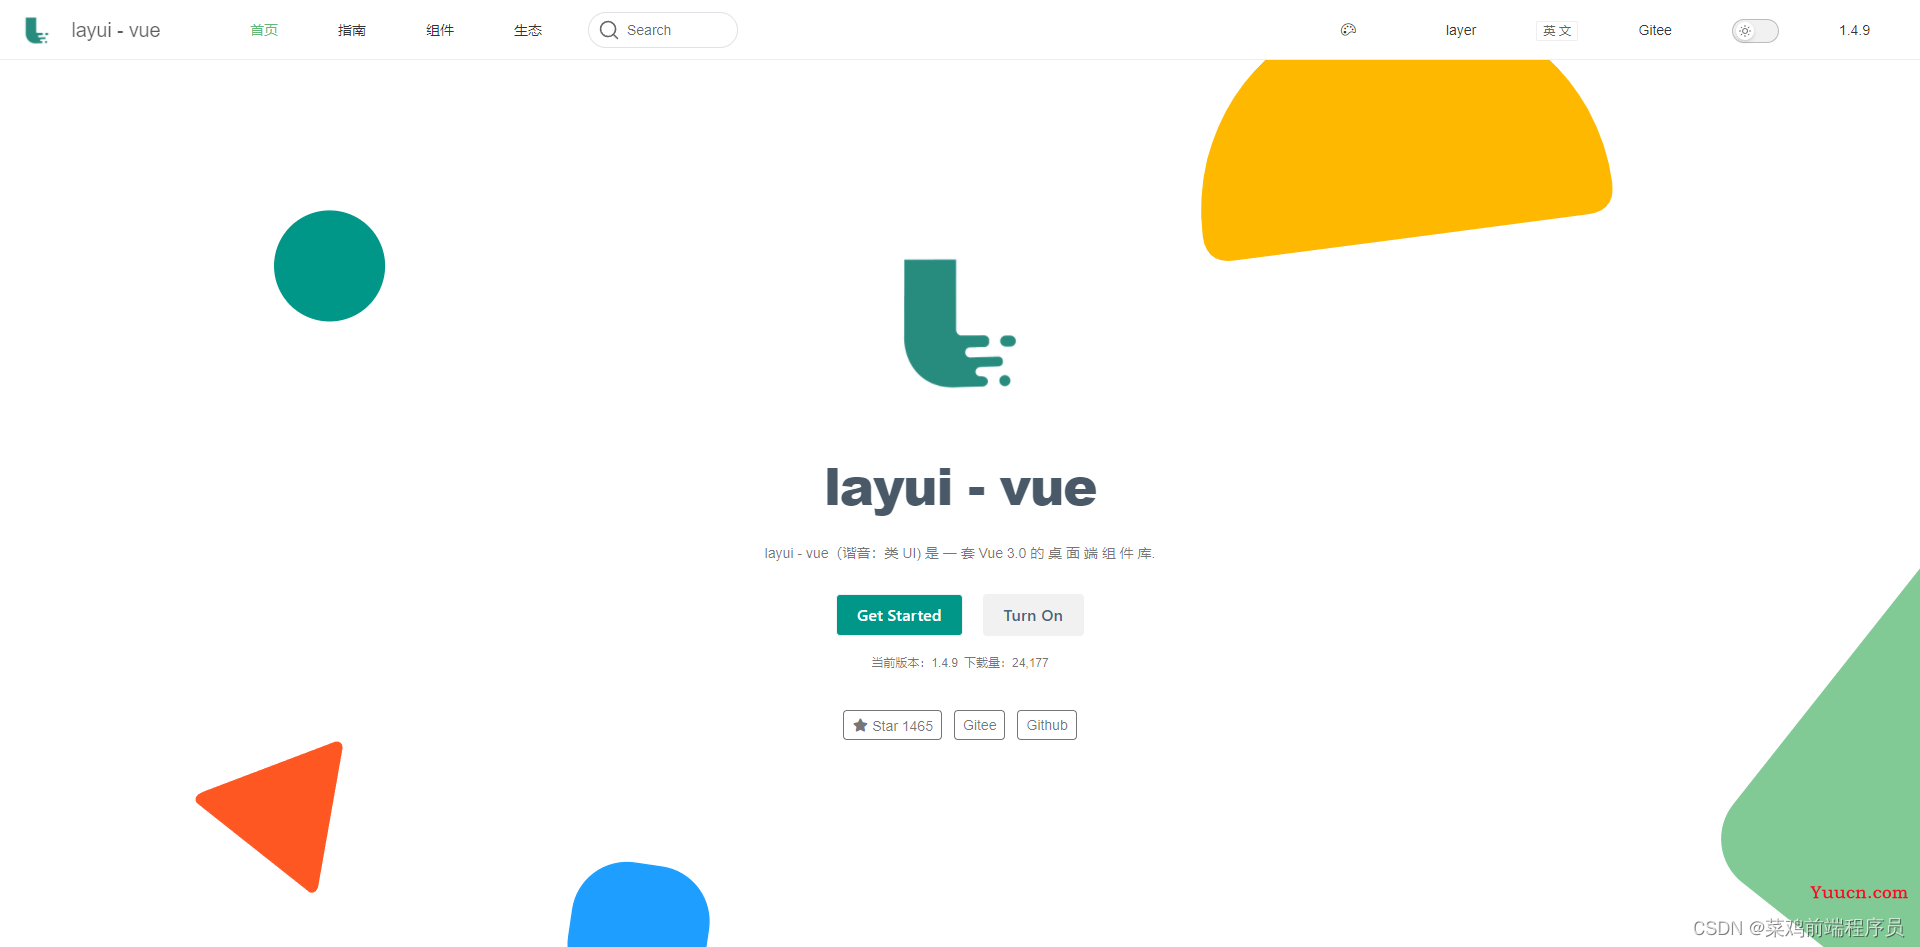 layui最新版本更新已全面拥抱Vue3，layui - vue是一套Vue 3.0的桌面端组件库，提供100%的layui的体验；